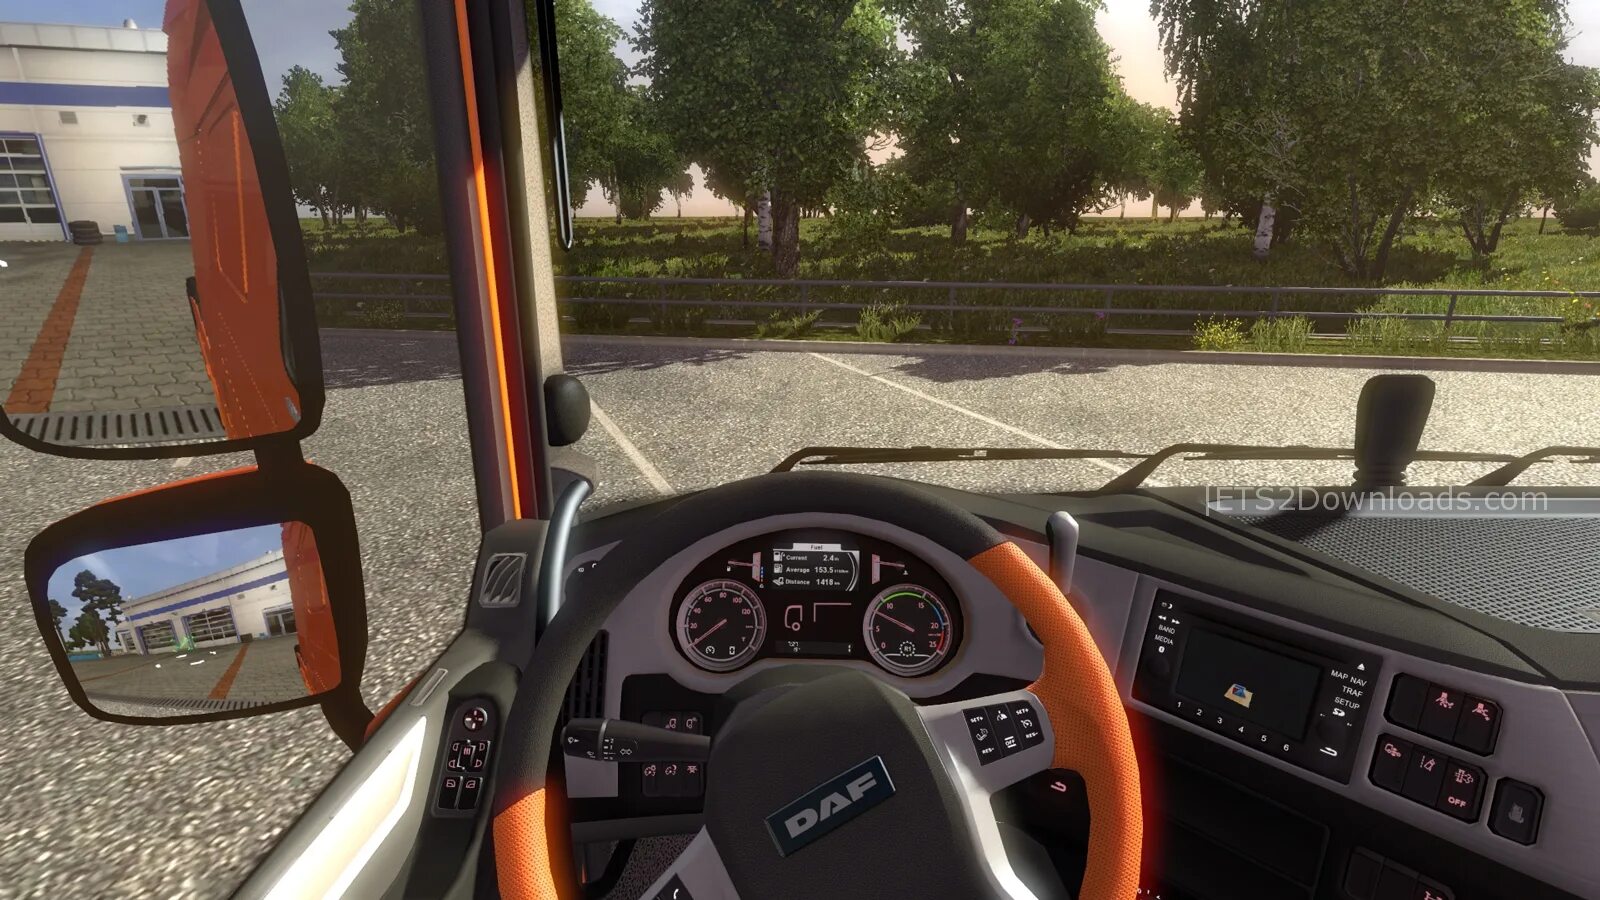 Включи евро 2. Евро трек симулятор 1. Дальнобойщики Euro Truck Simulator 2019. Euro Truck Simulator 1 геймплей. ETS 2 Gameplay.